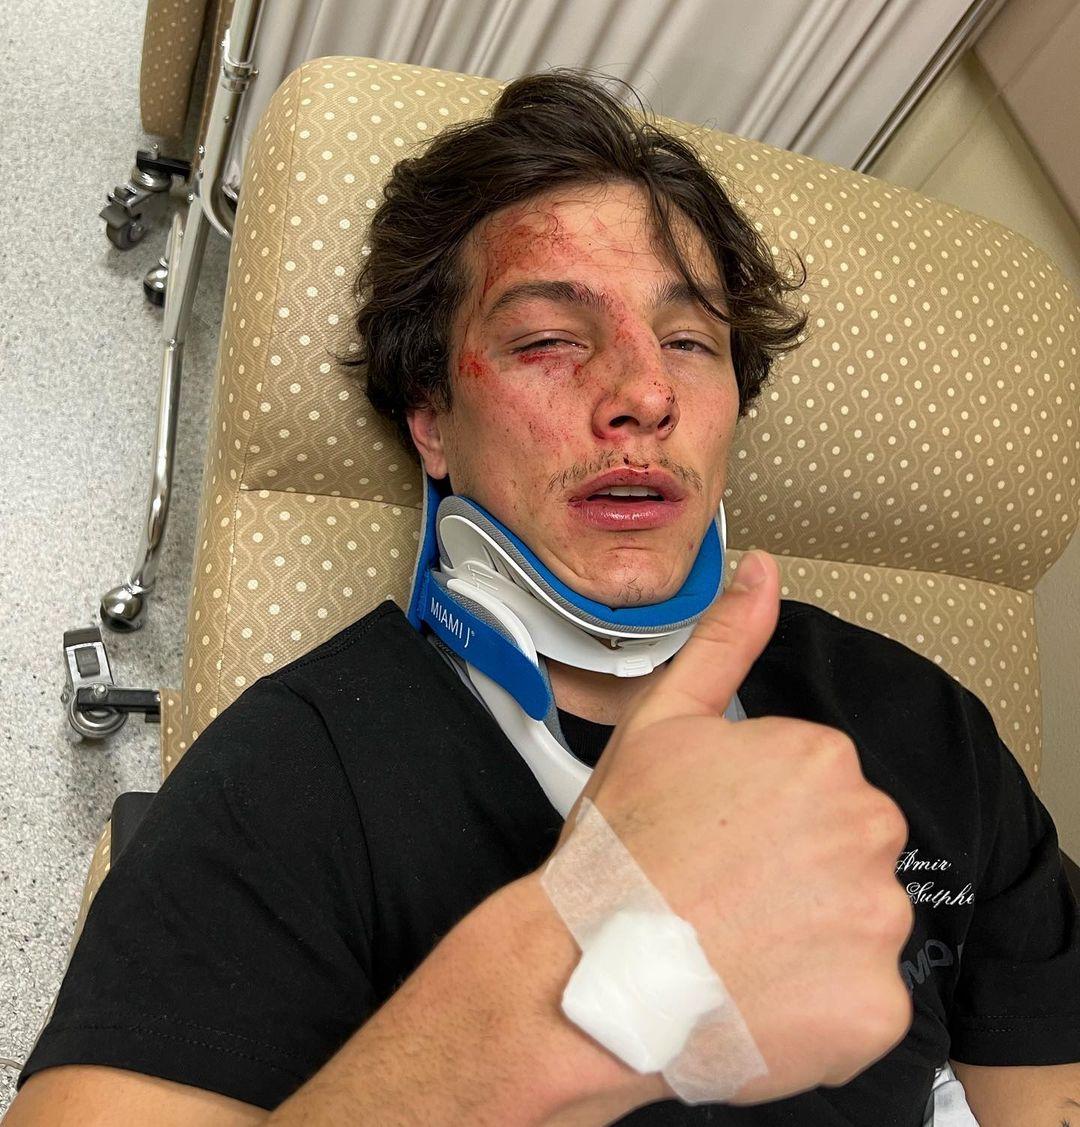 TikTok Star Tayler Holder Hospitalized, Shows Off Bloody Aftermath